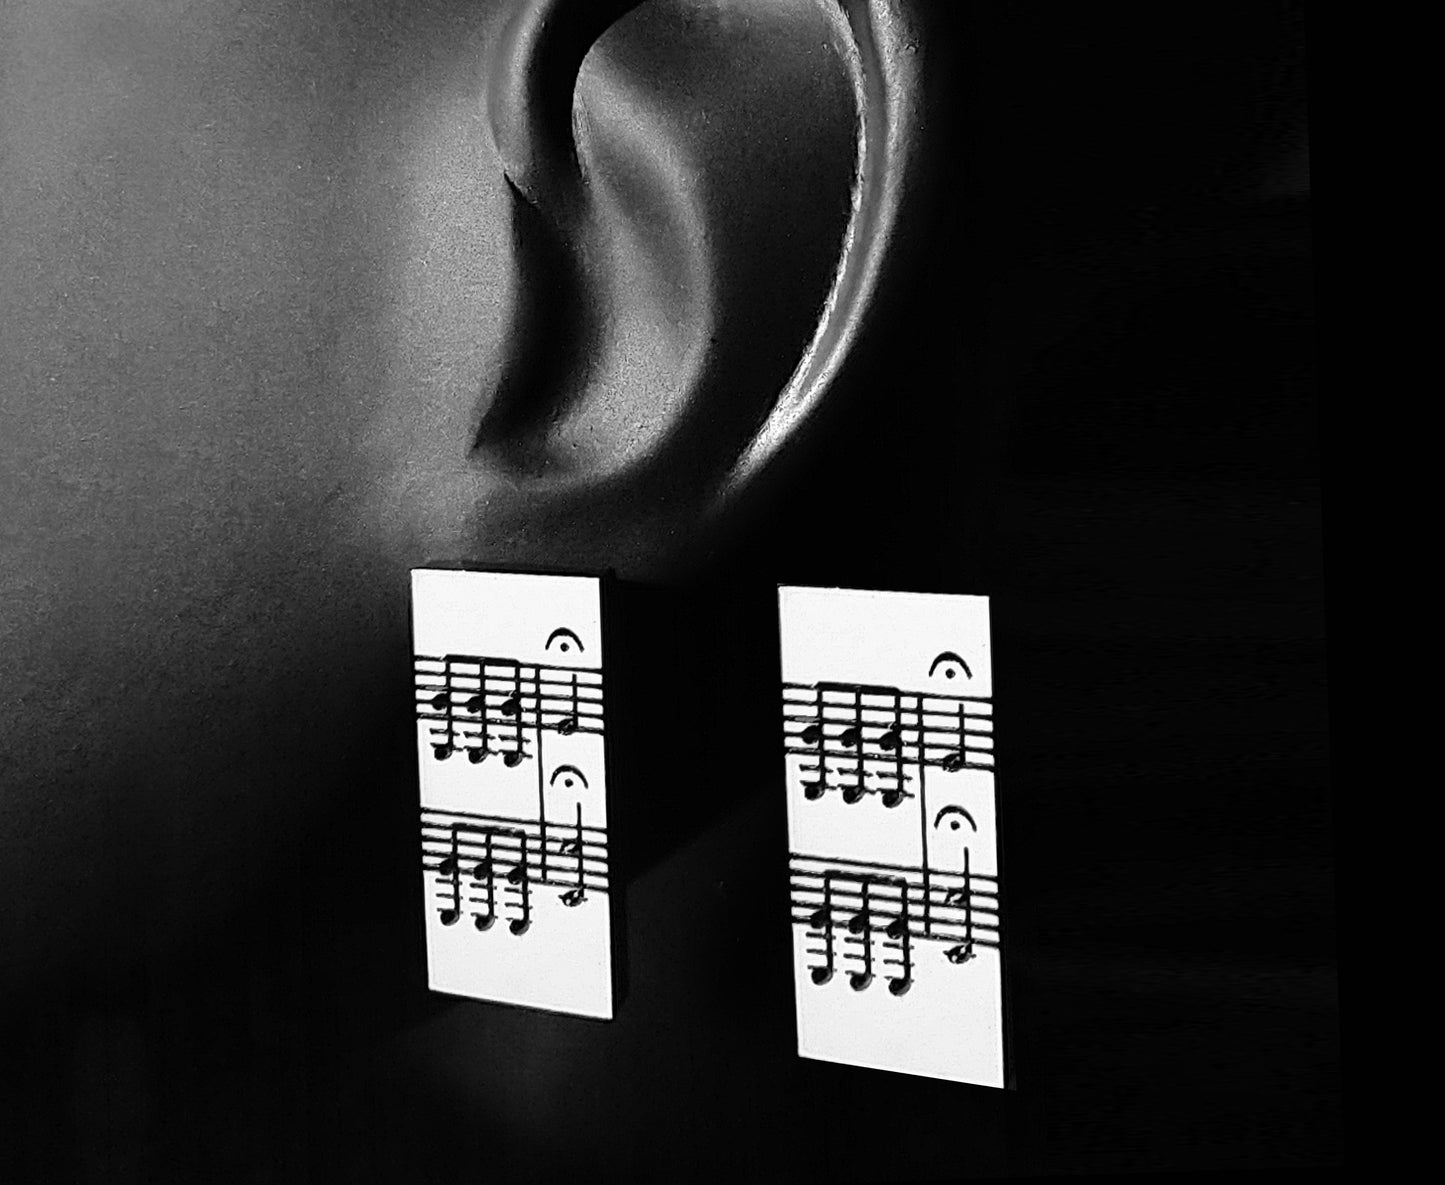 Beethoven's 5th Symphony Earrings